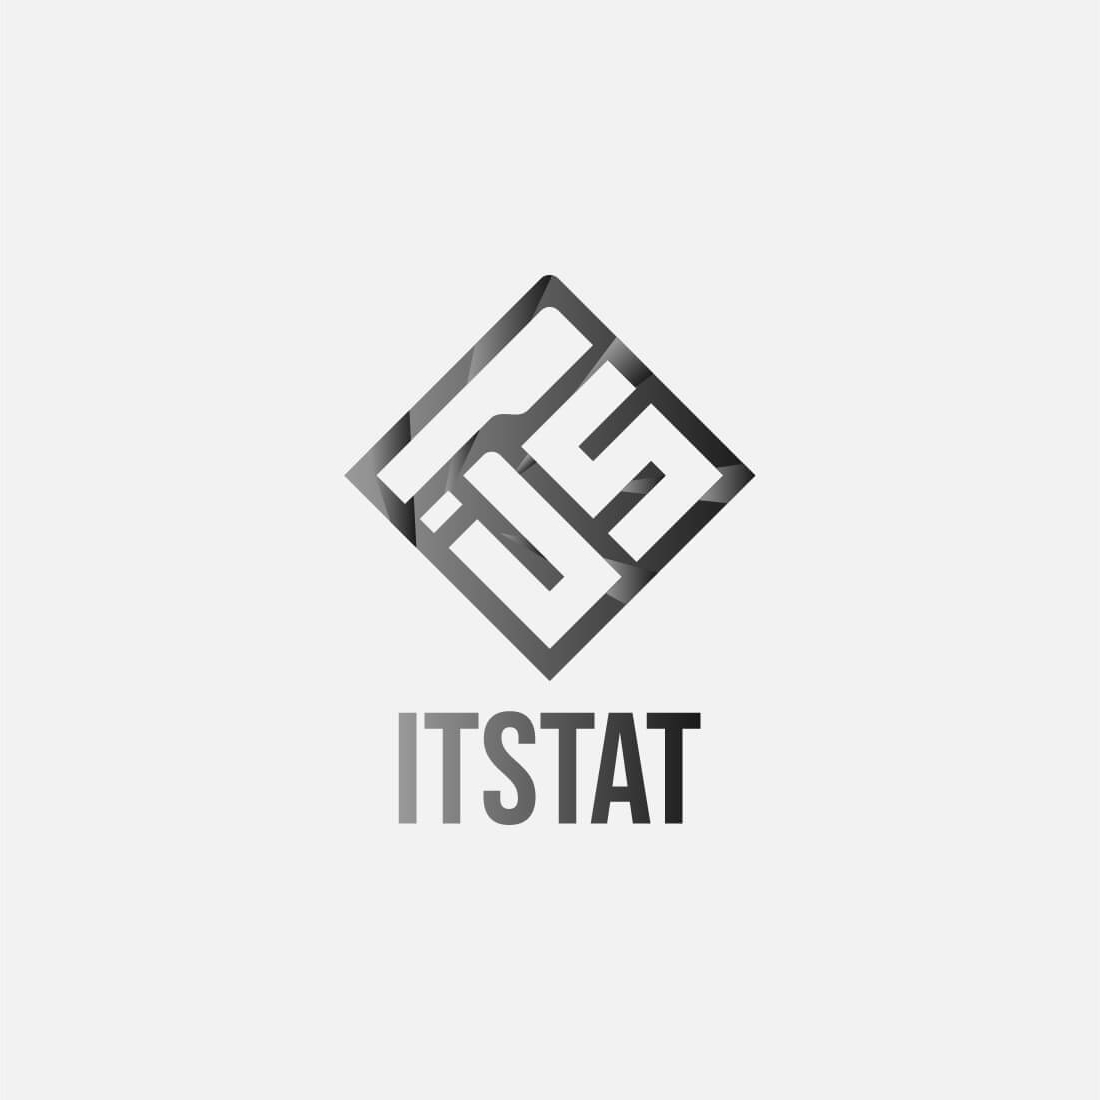 IT Stat Logo Design - IT Company Logo Template